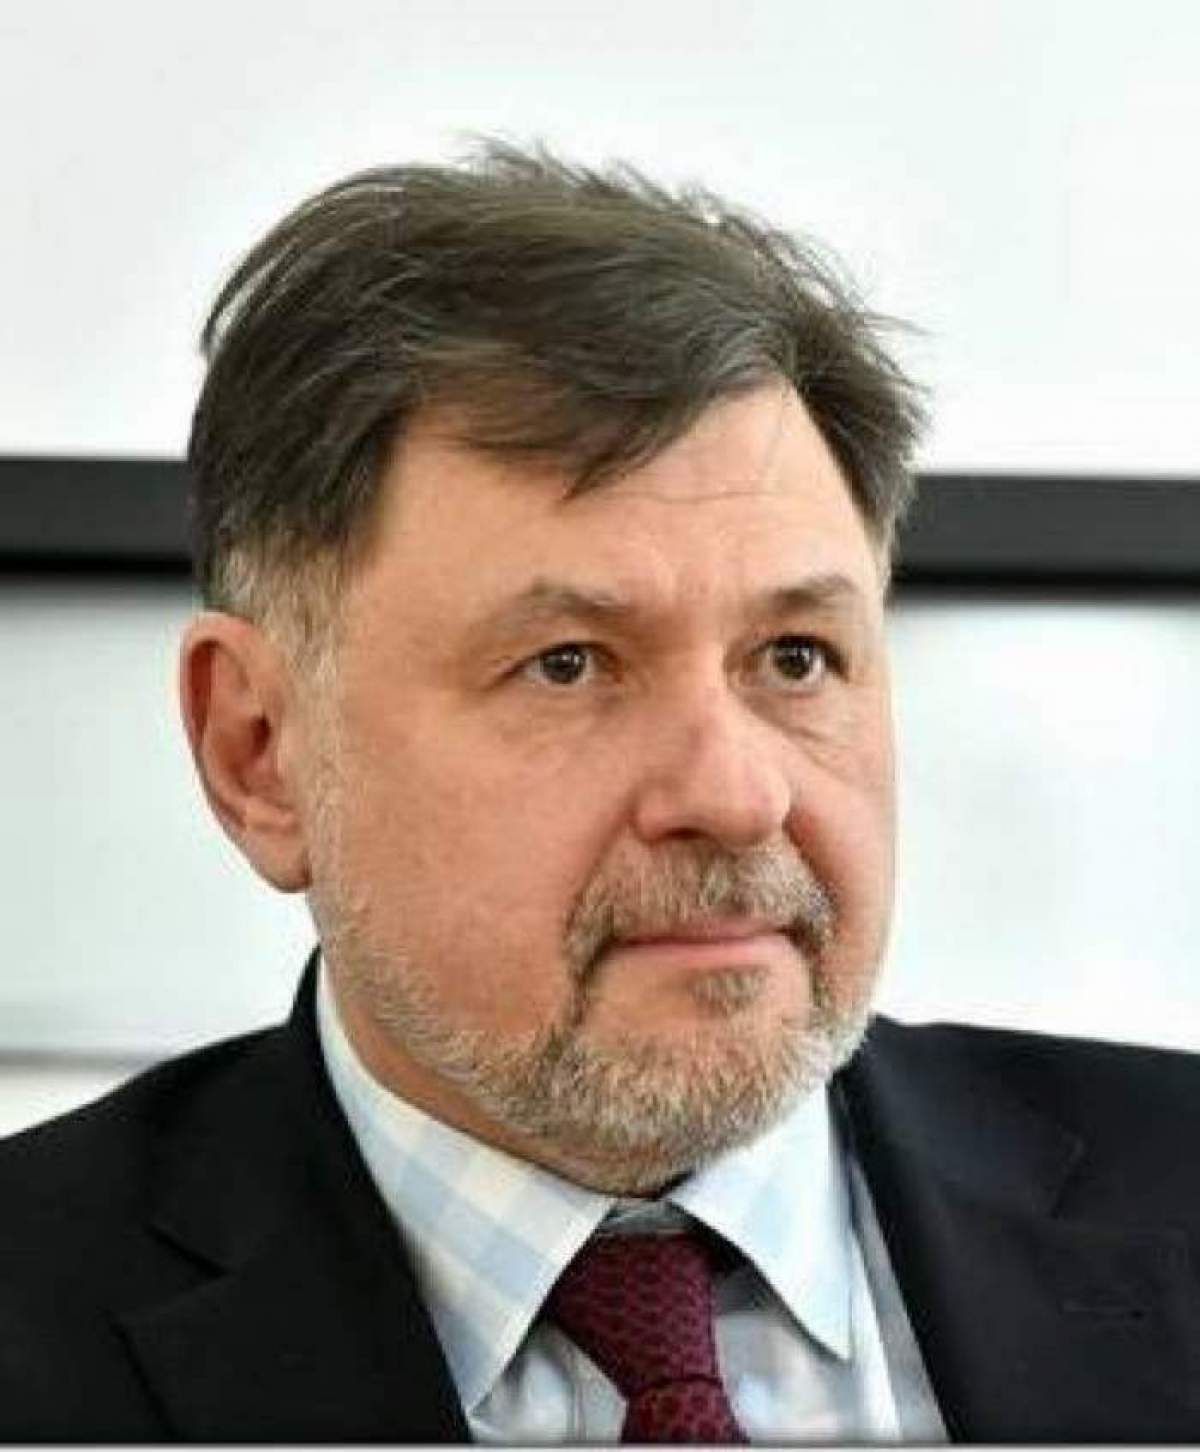 Alexandru Rafila s-a fotografiat la costum și cravată